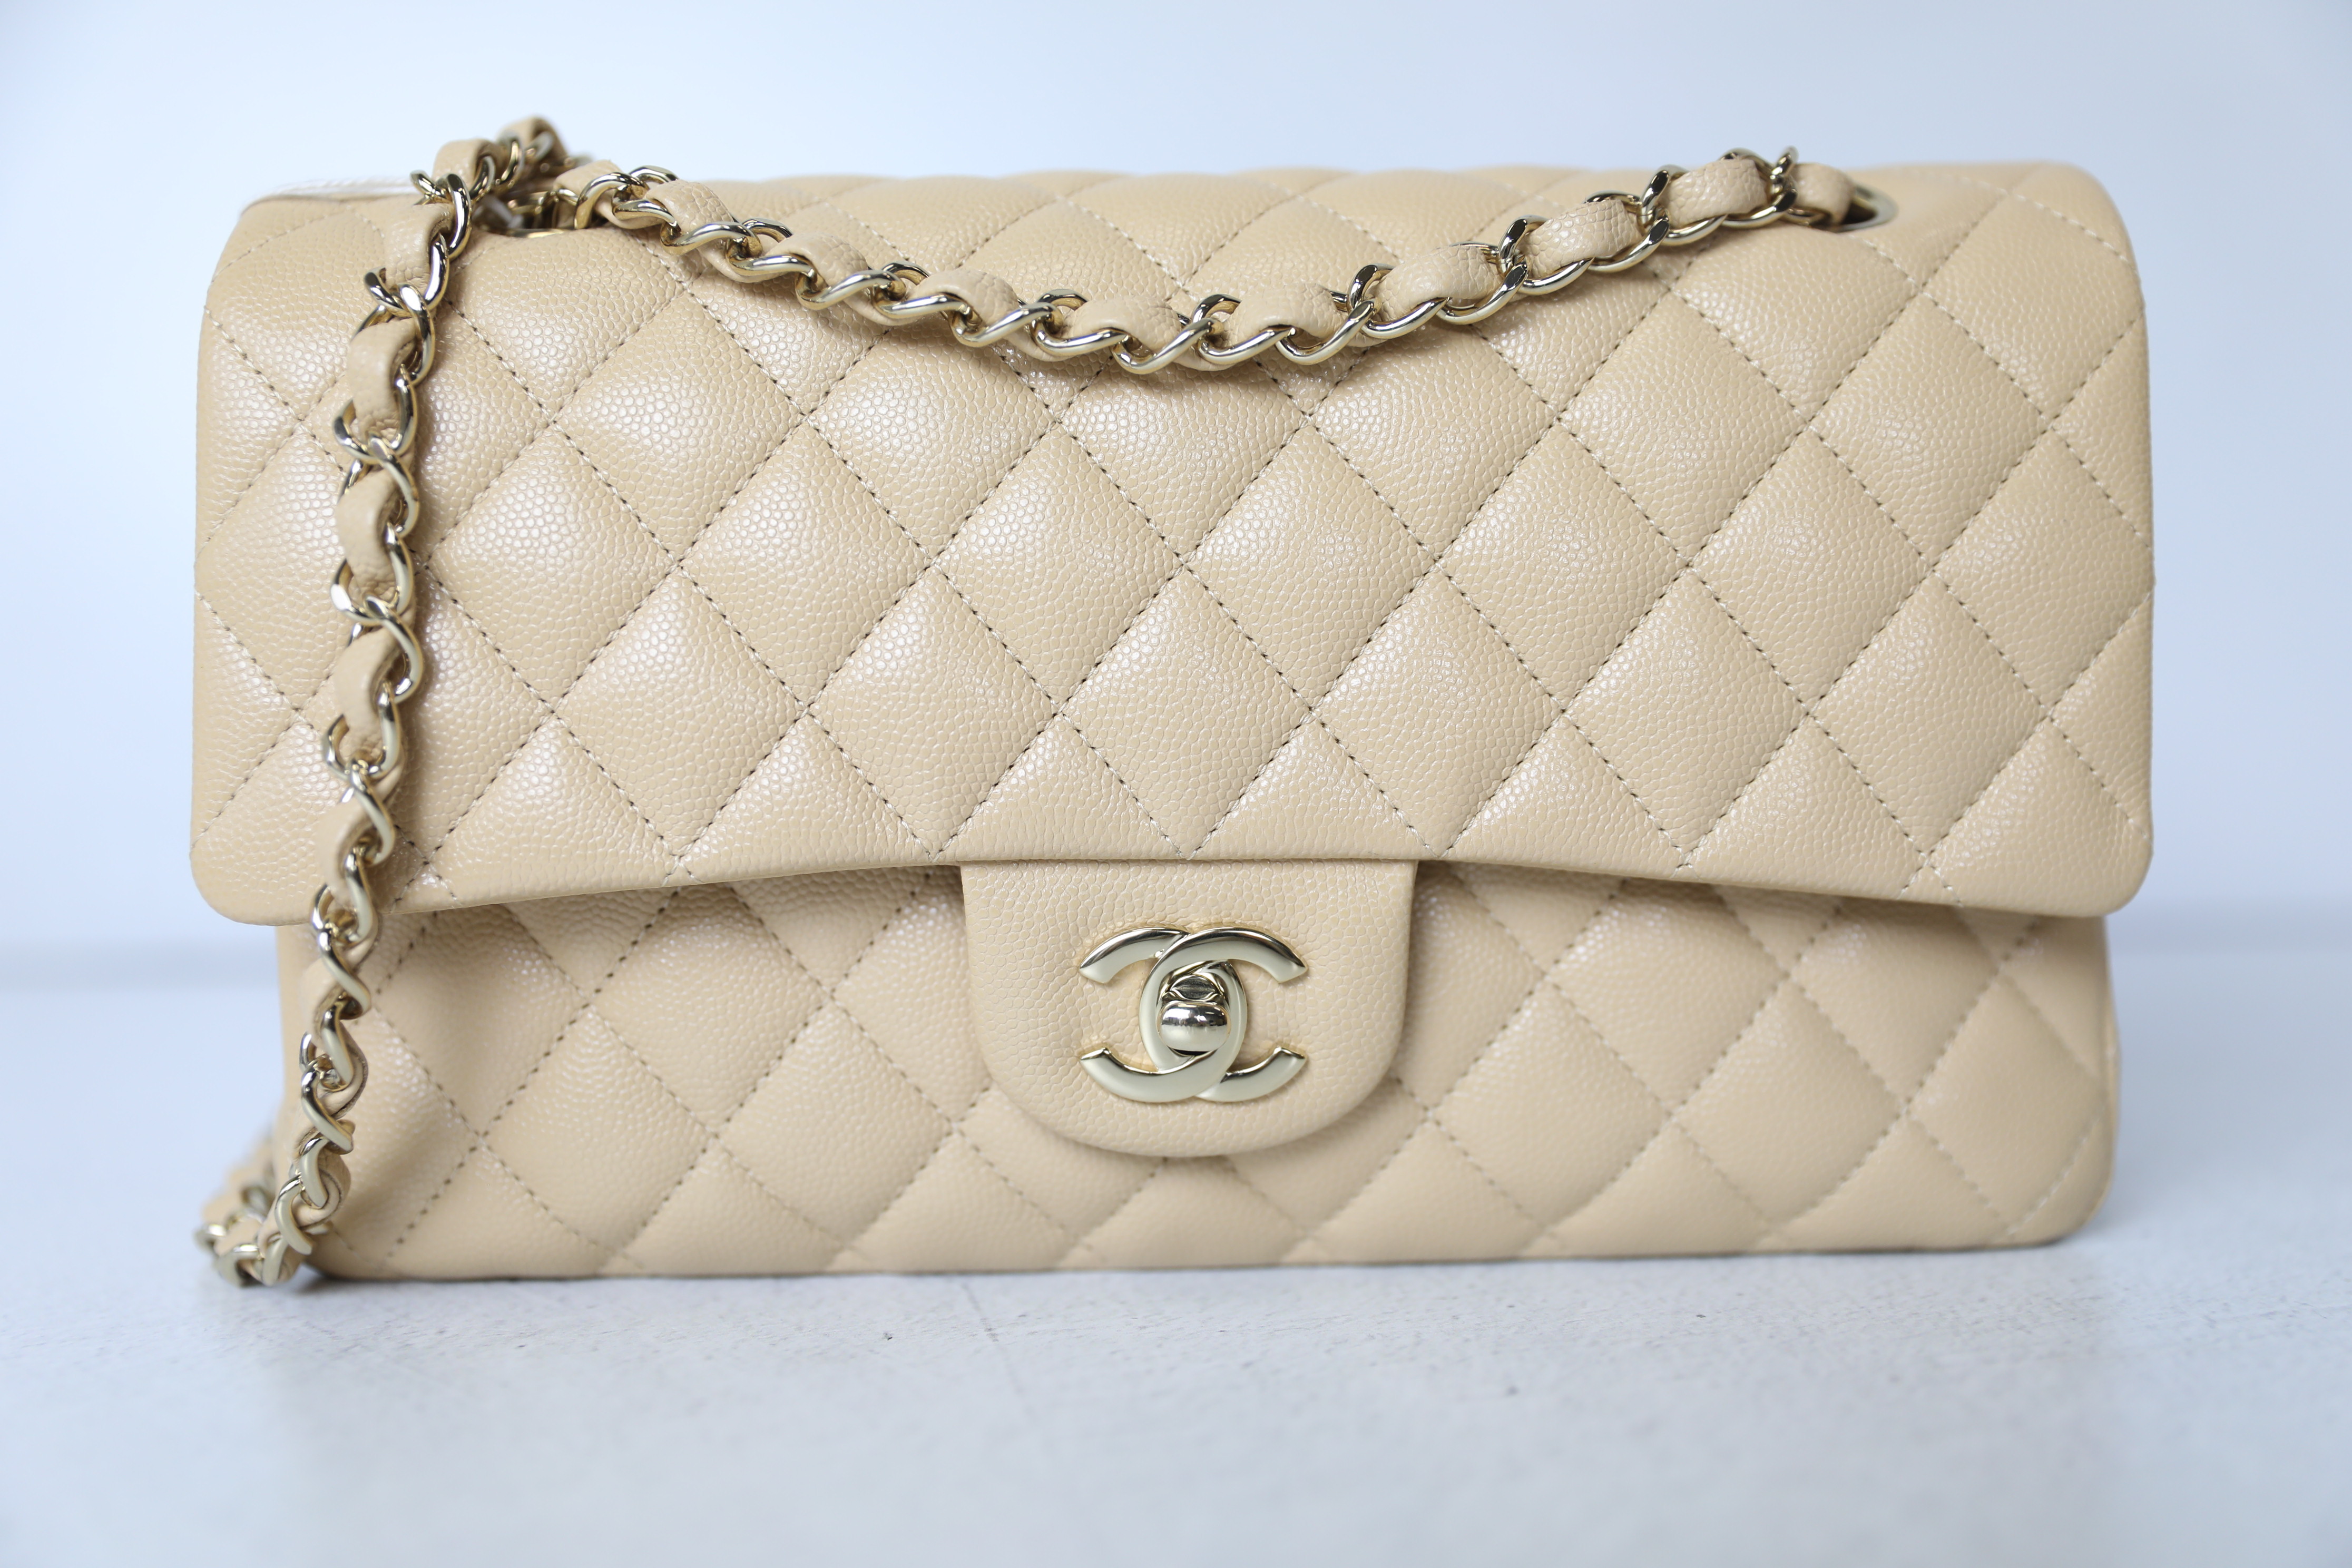 Chanel Classic Medium Double Flap, 21S Dark Beige Iridescent Caviar  Leather, Gold Hardware, Like New in Box - Julia Rose Boston